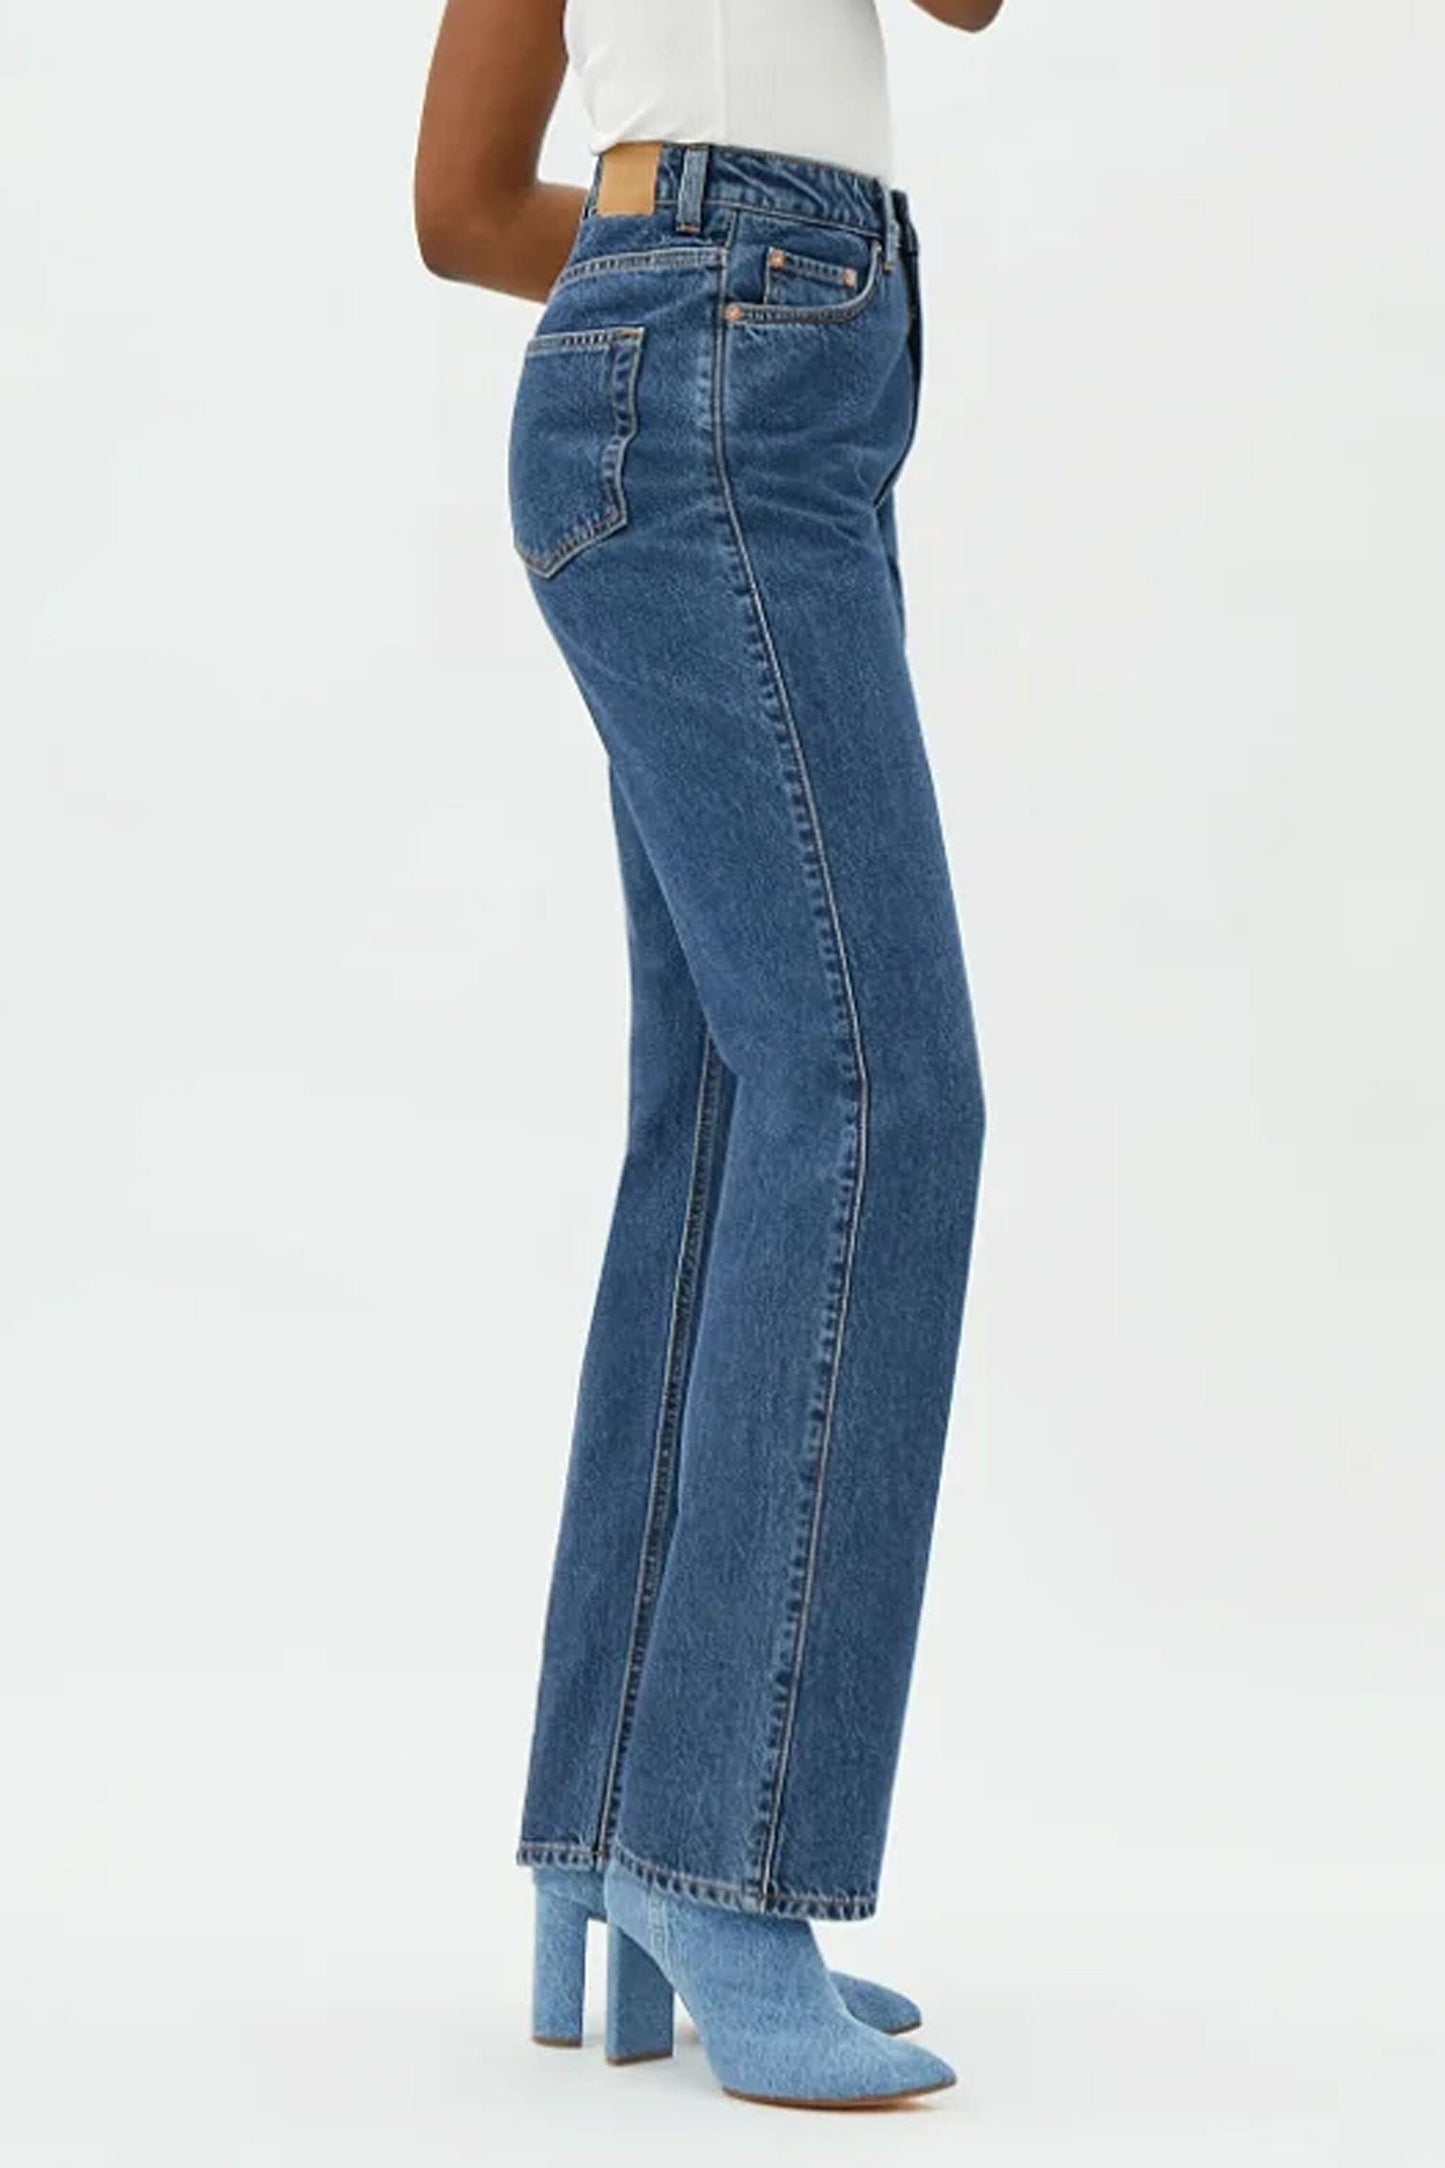 Weekday Women's Straight Fit Denim Jeans Women's Denim HAS Apparel 